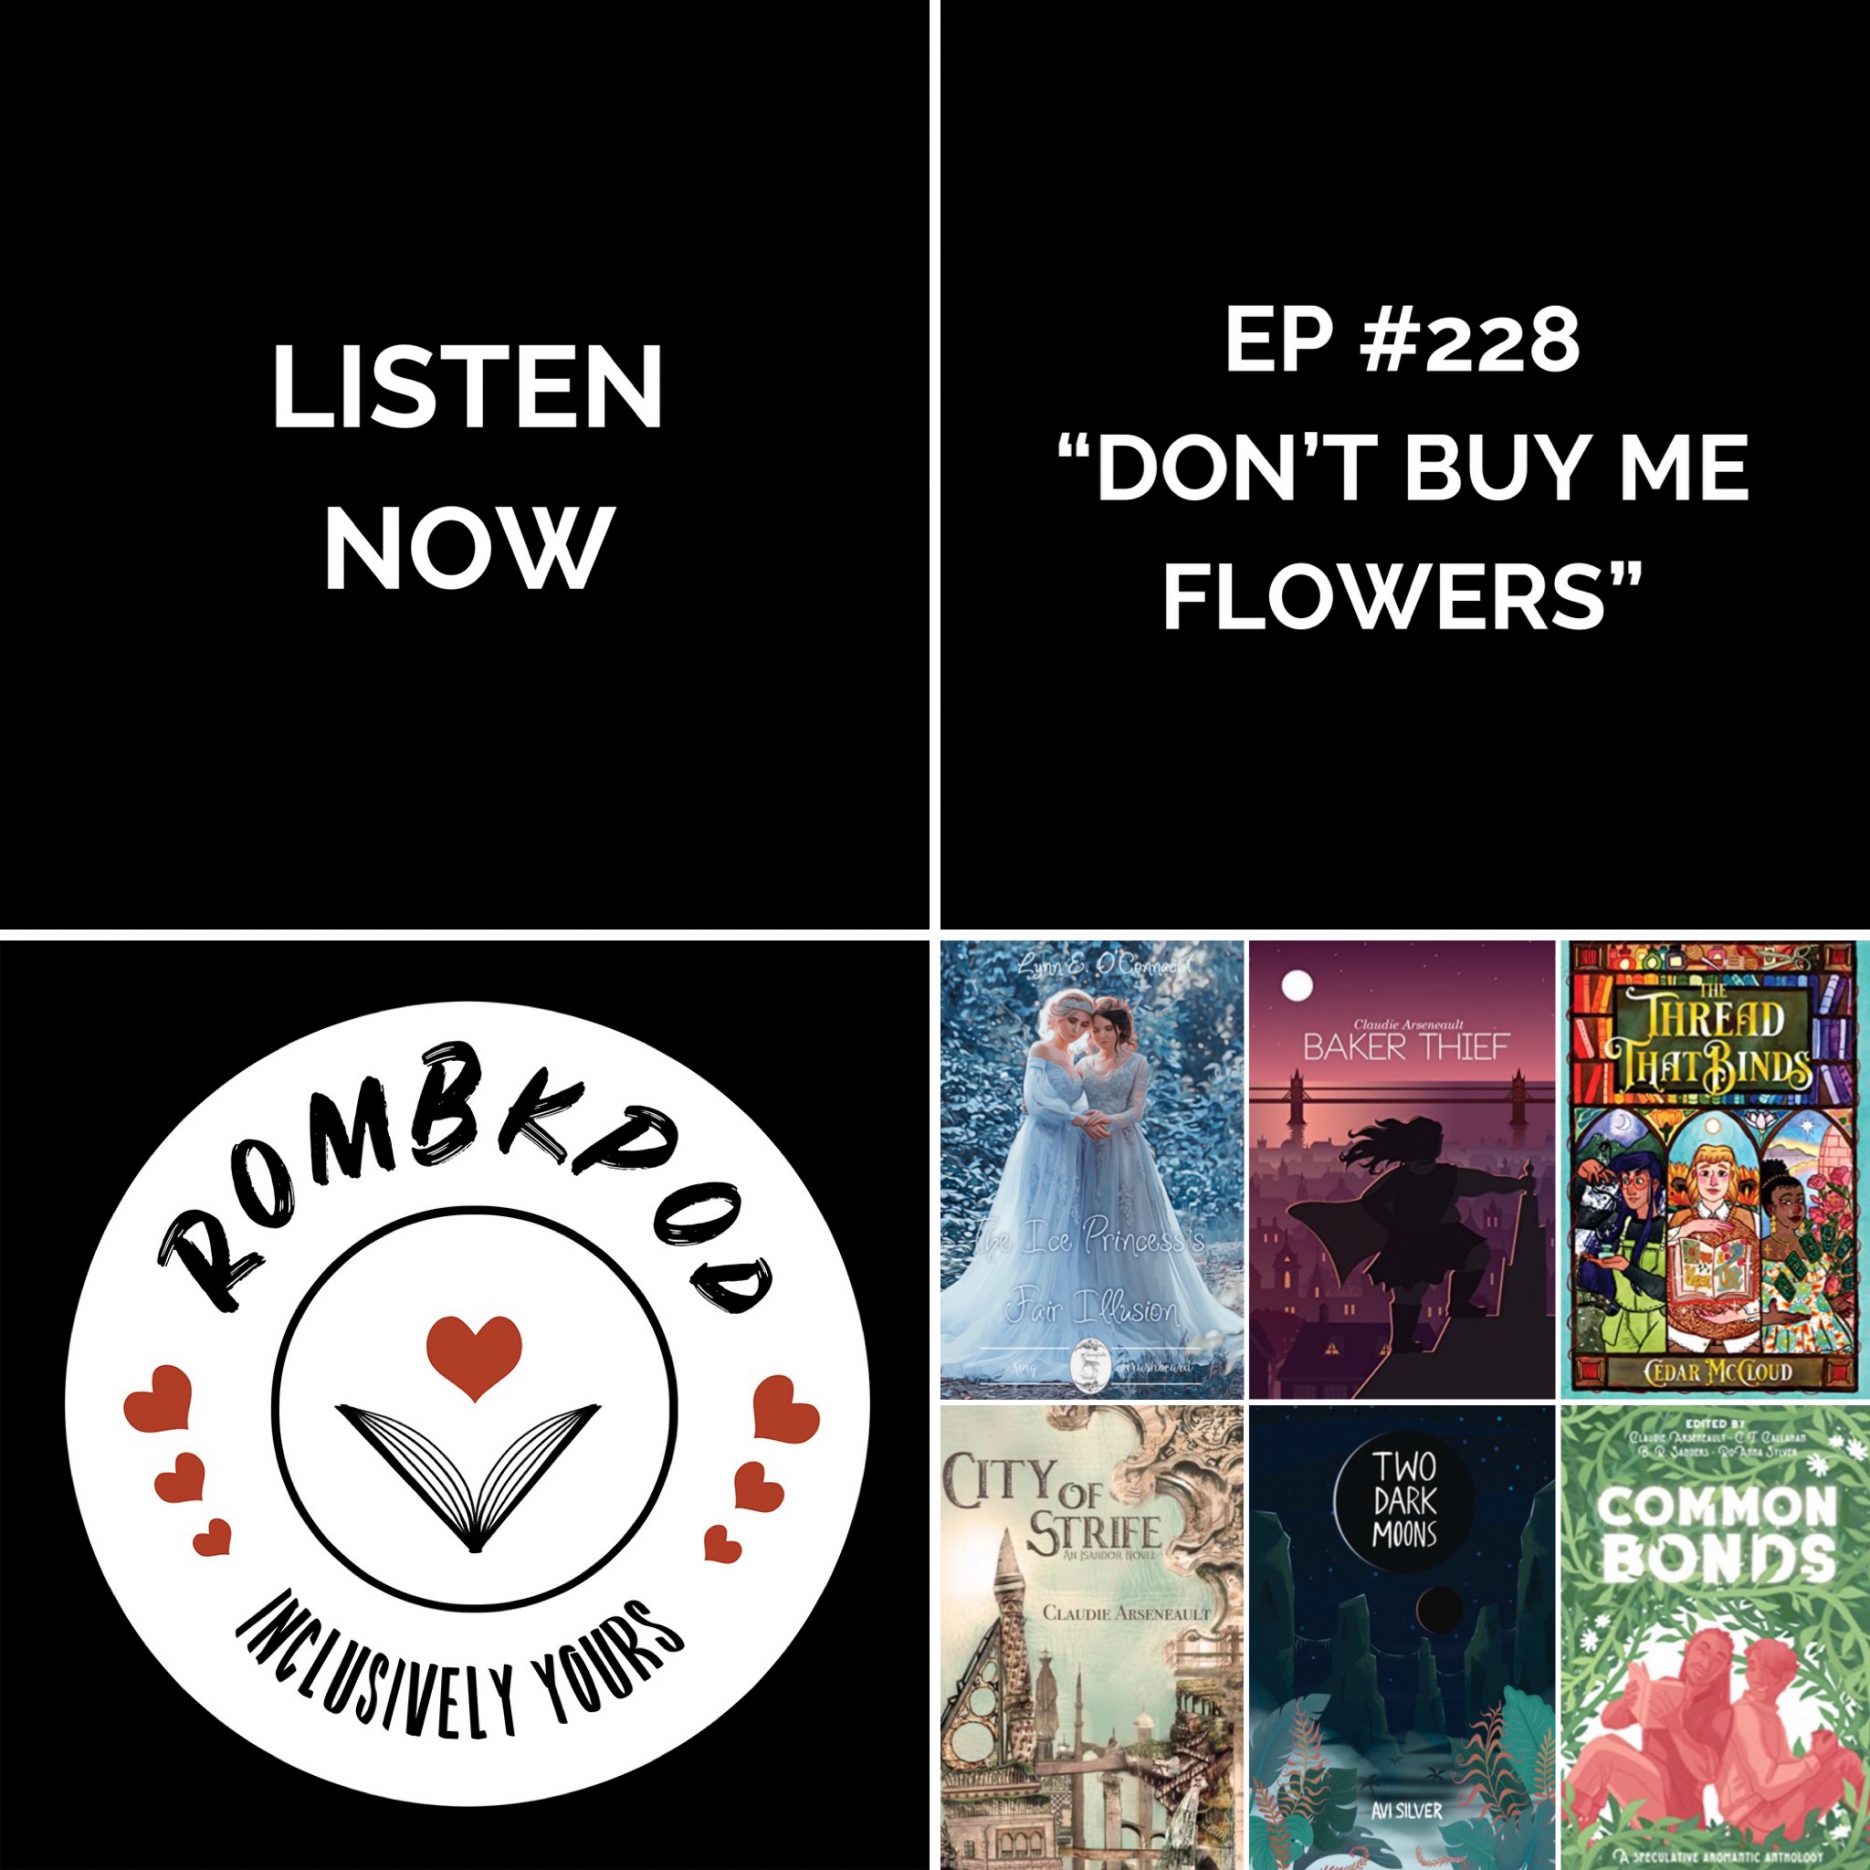 IMAGE: lower left corner, RomBkPod heart logo; lower right corner, ep #228 book cover collage; IMAGE TEXT: Listen Now, ep #228 "Don't Buy Me Flowers"